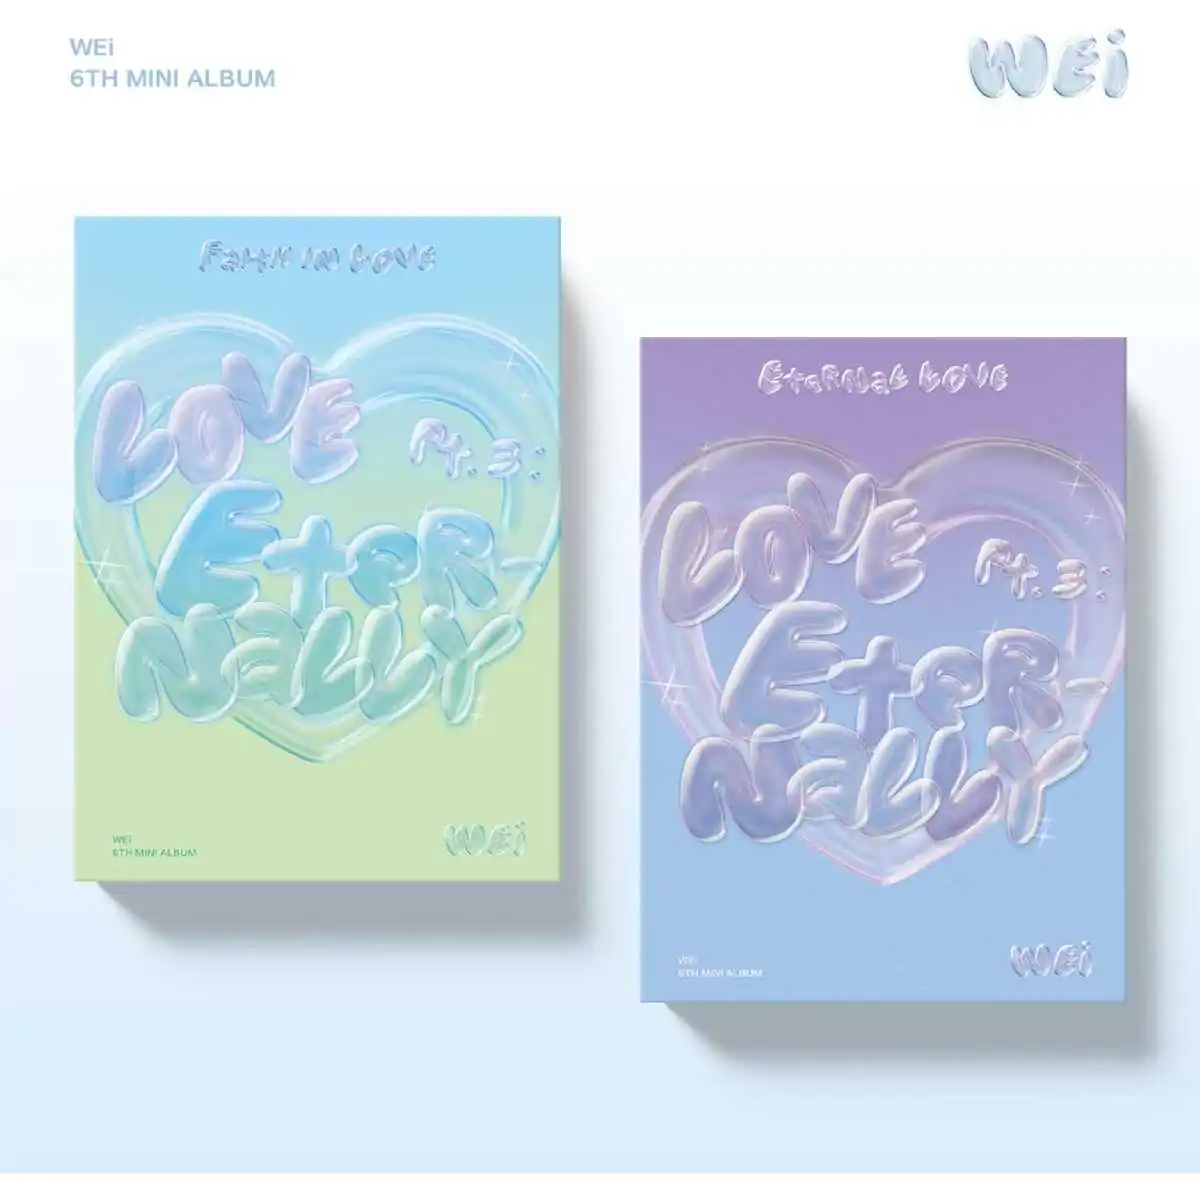 WEi - Eternally 'Eternal love' Love Pt.3 (Random Version) (6th EP Album) 